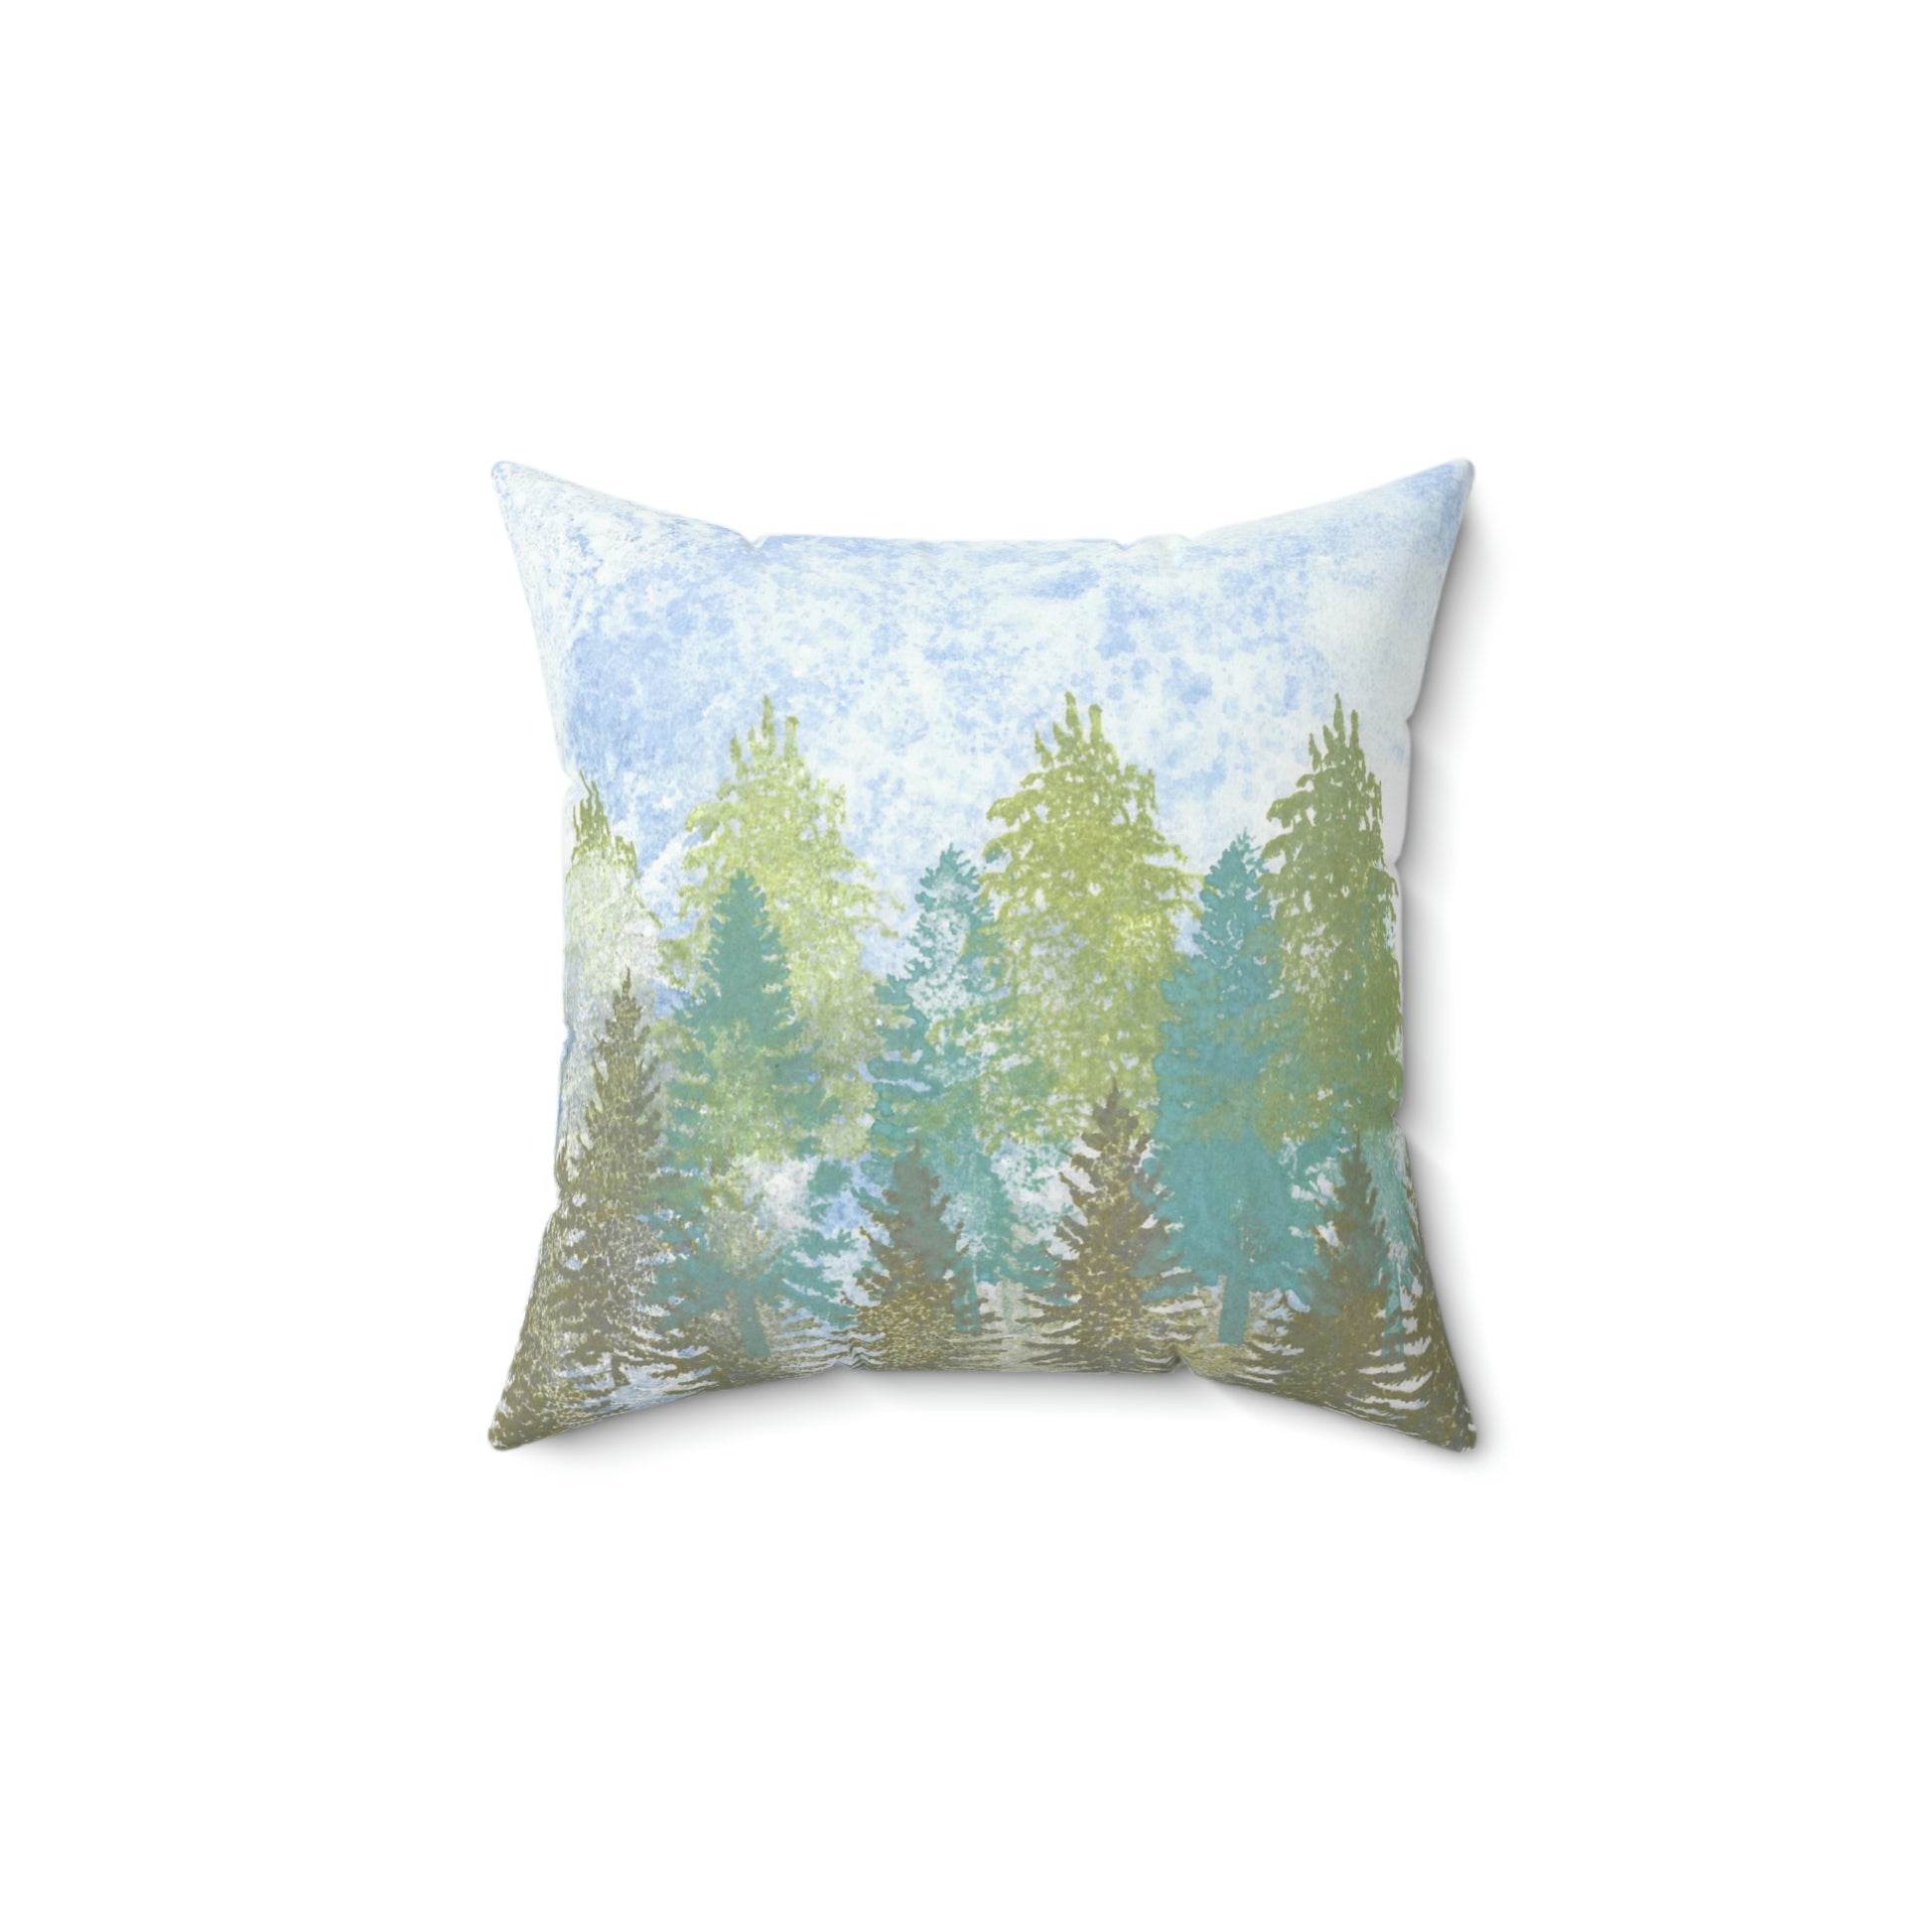 Evergreen Forest Square Pillow - Alja Design